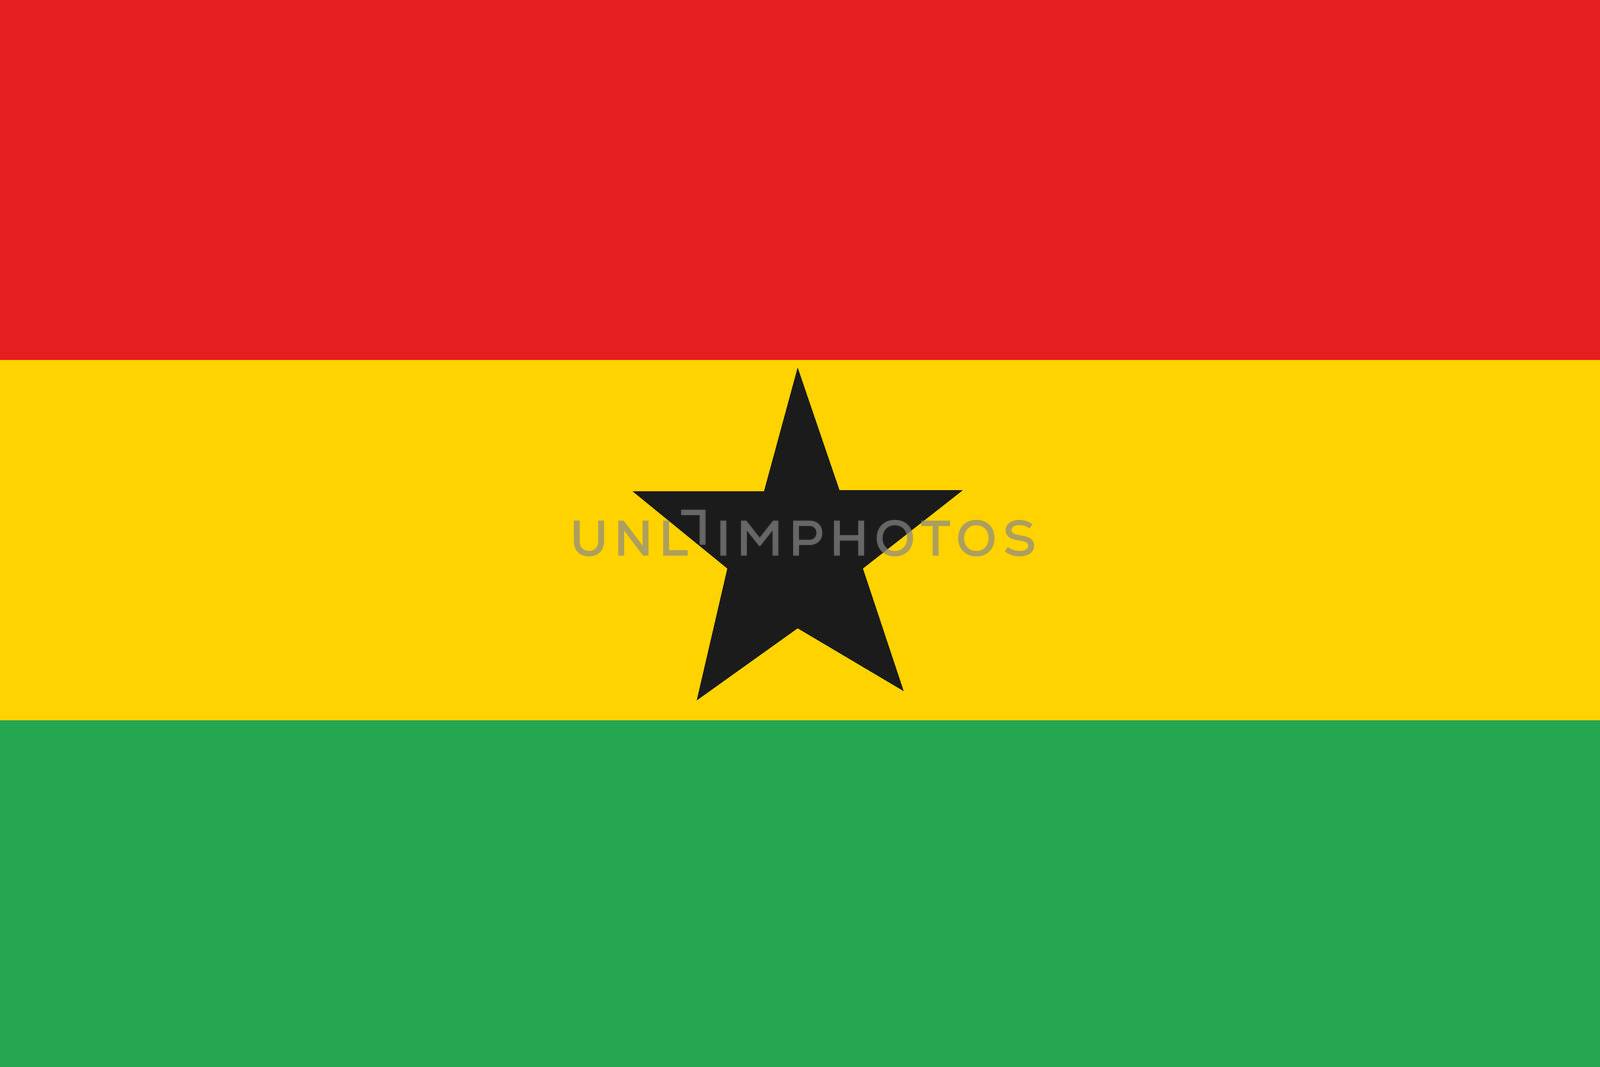 An illustration of the flag of Ghana